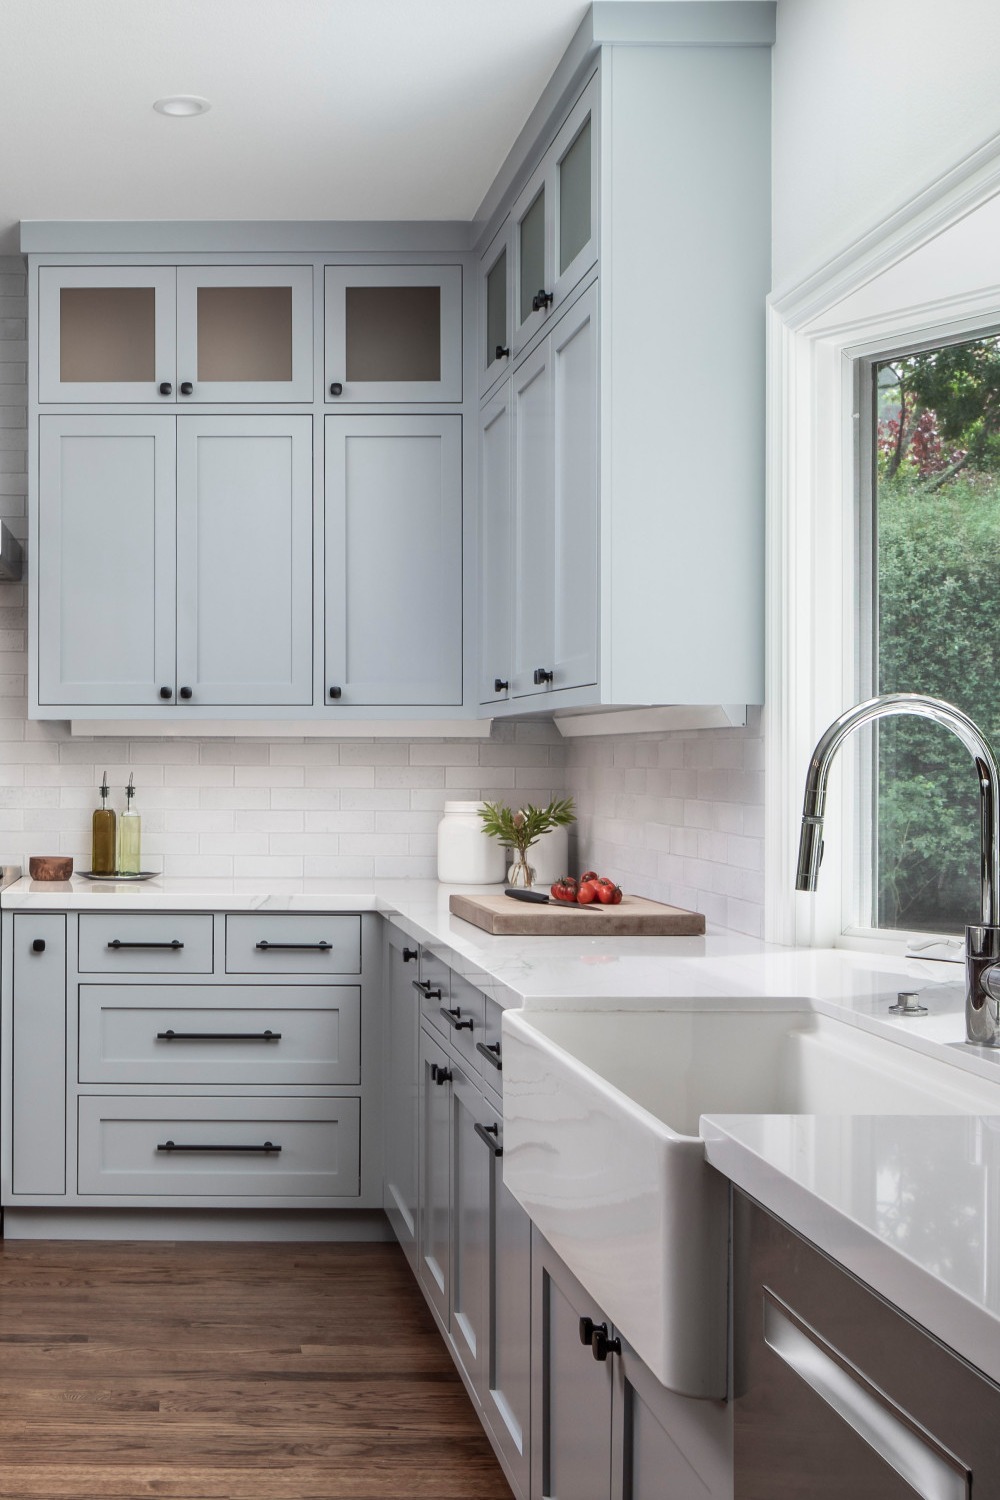 Light Kitchen Cabinets White Subway Tile Backsplash Bottom And Upper Turquoise Cabinets